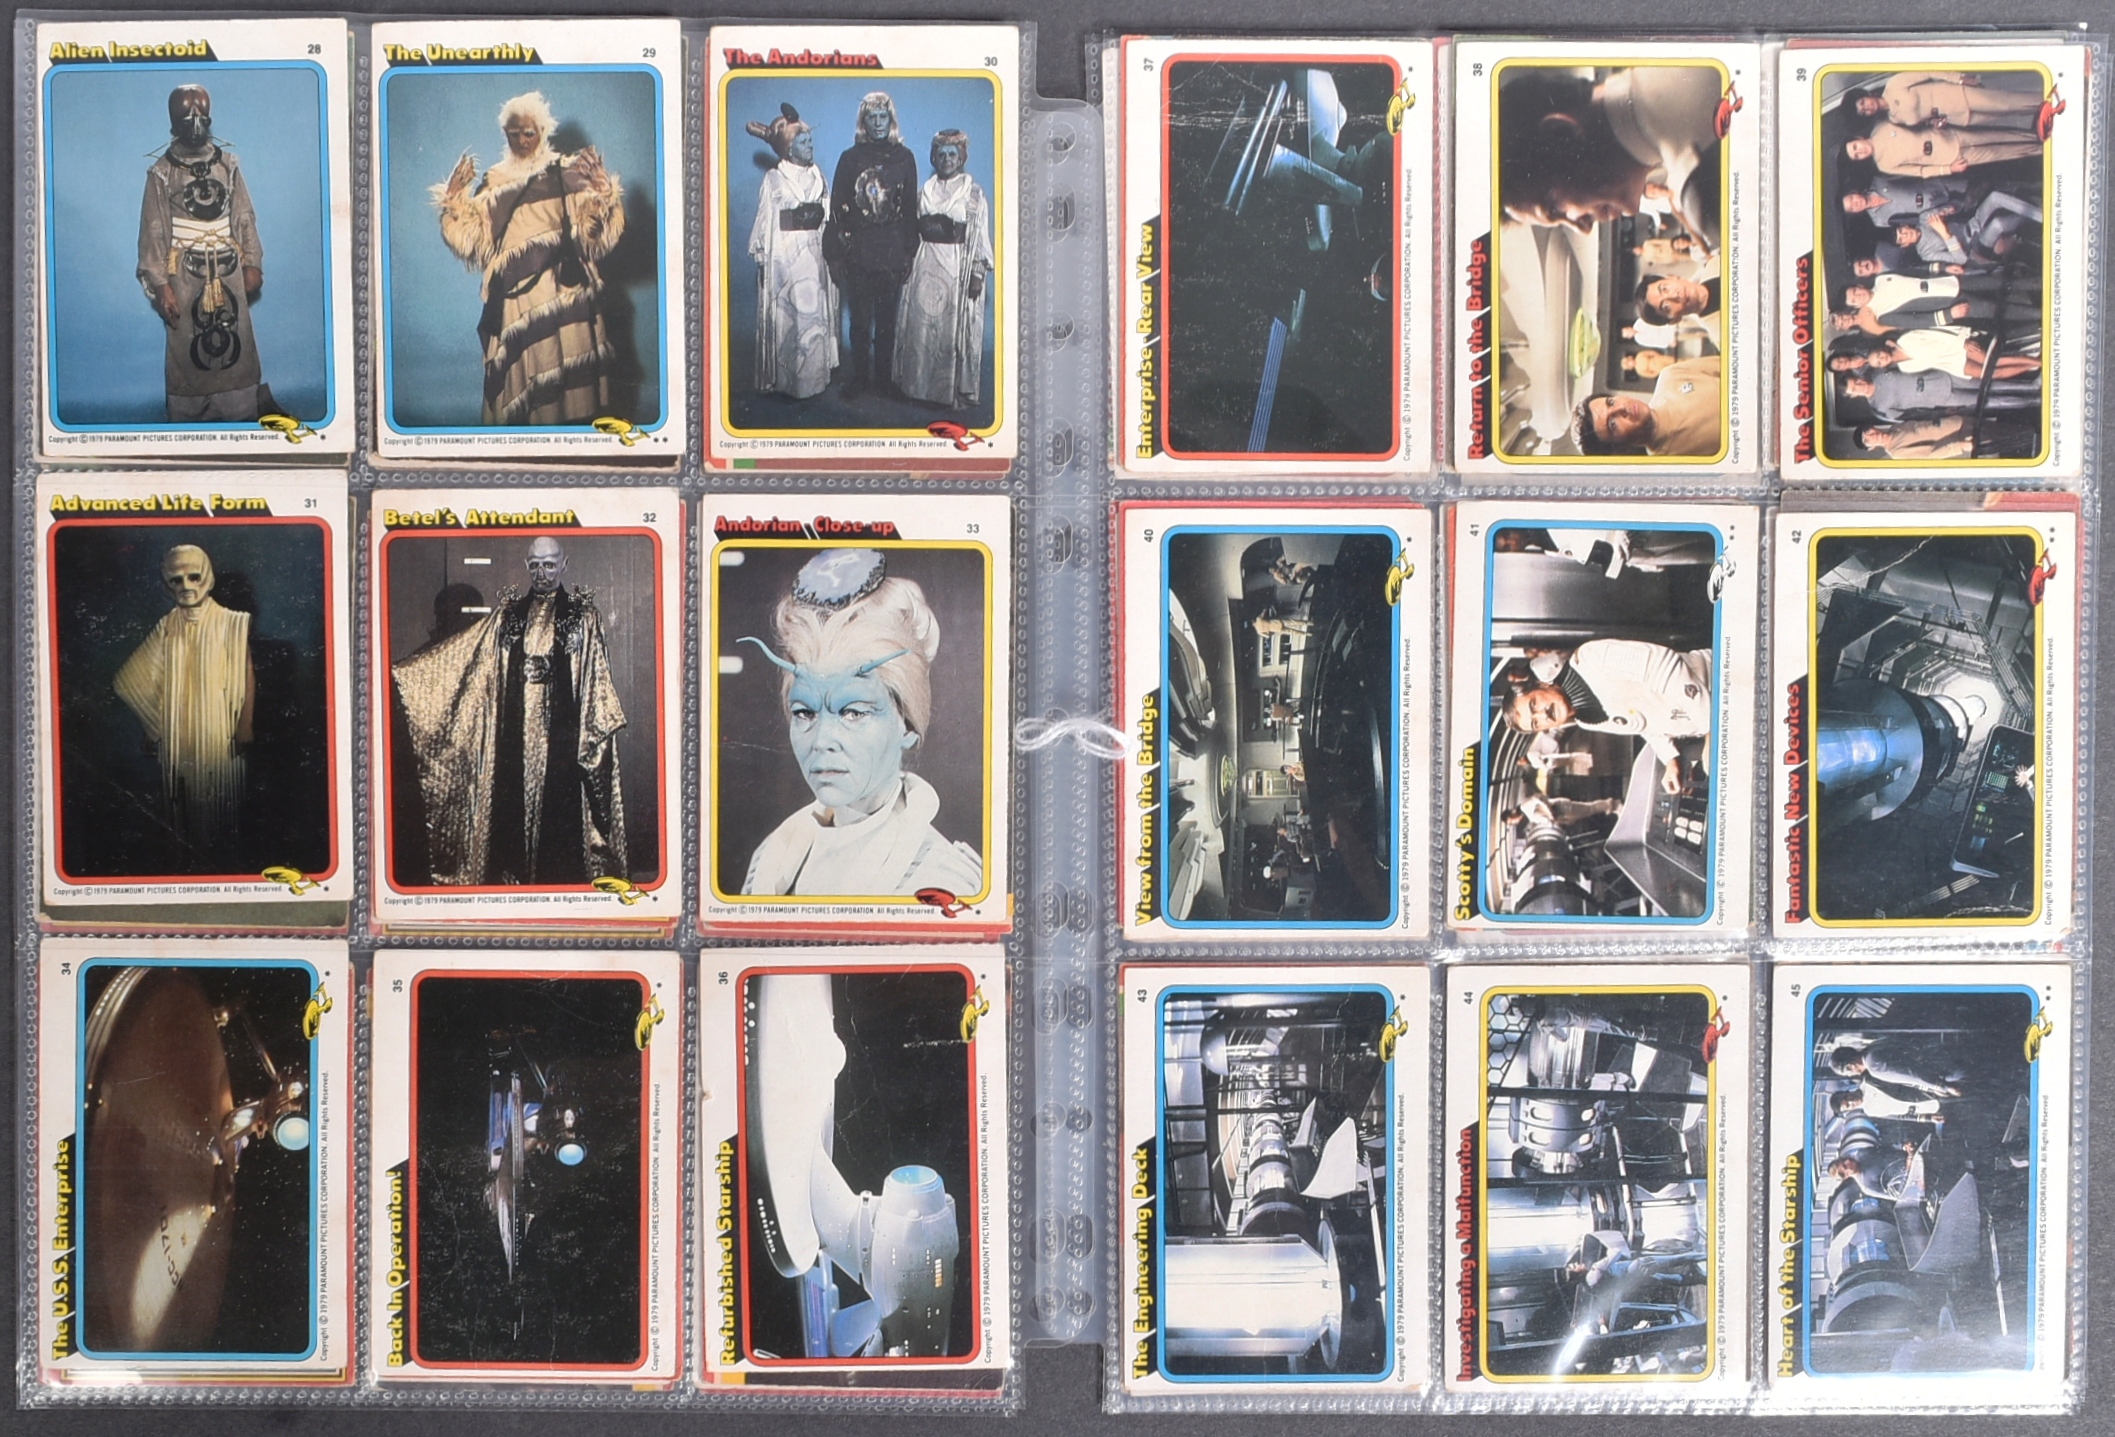 STAR TREK THE MOTION PICTURE - 1979 - FULL SET OF BUBBLEGUM CARDS - Image 3 of 4